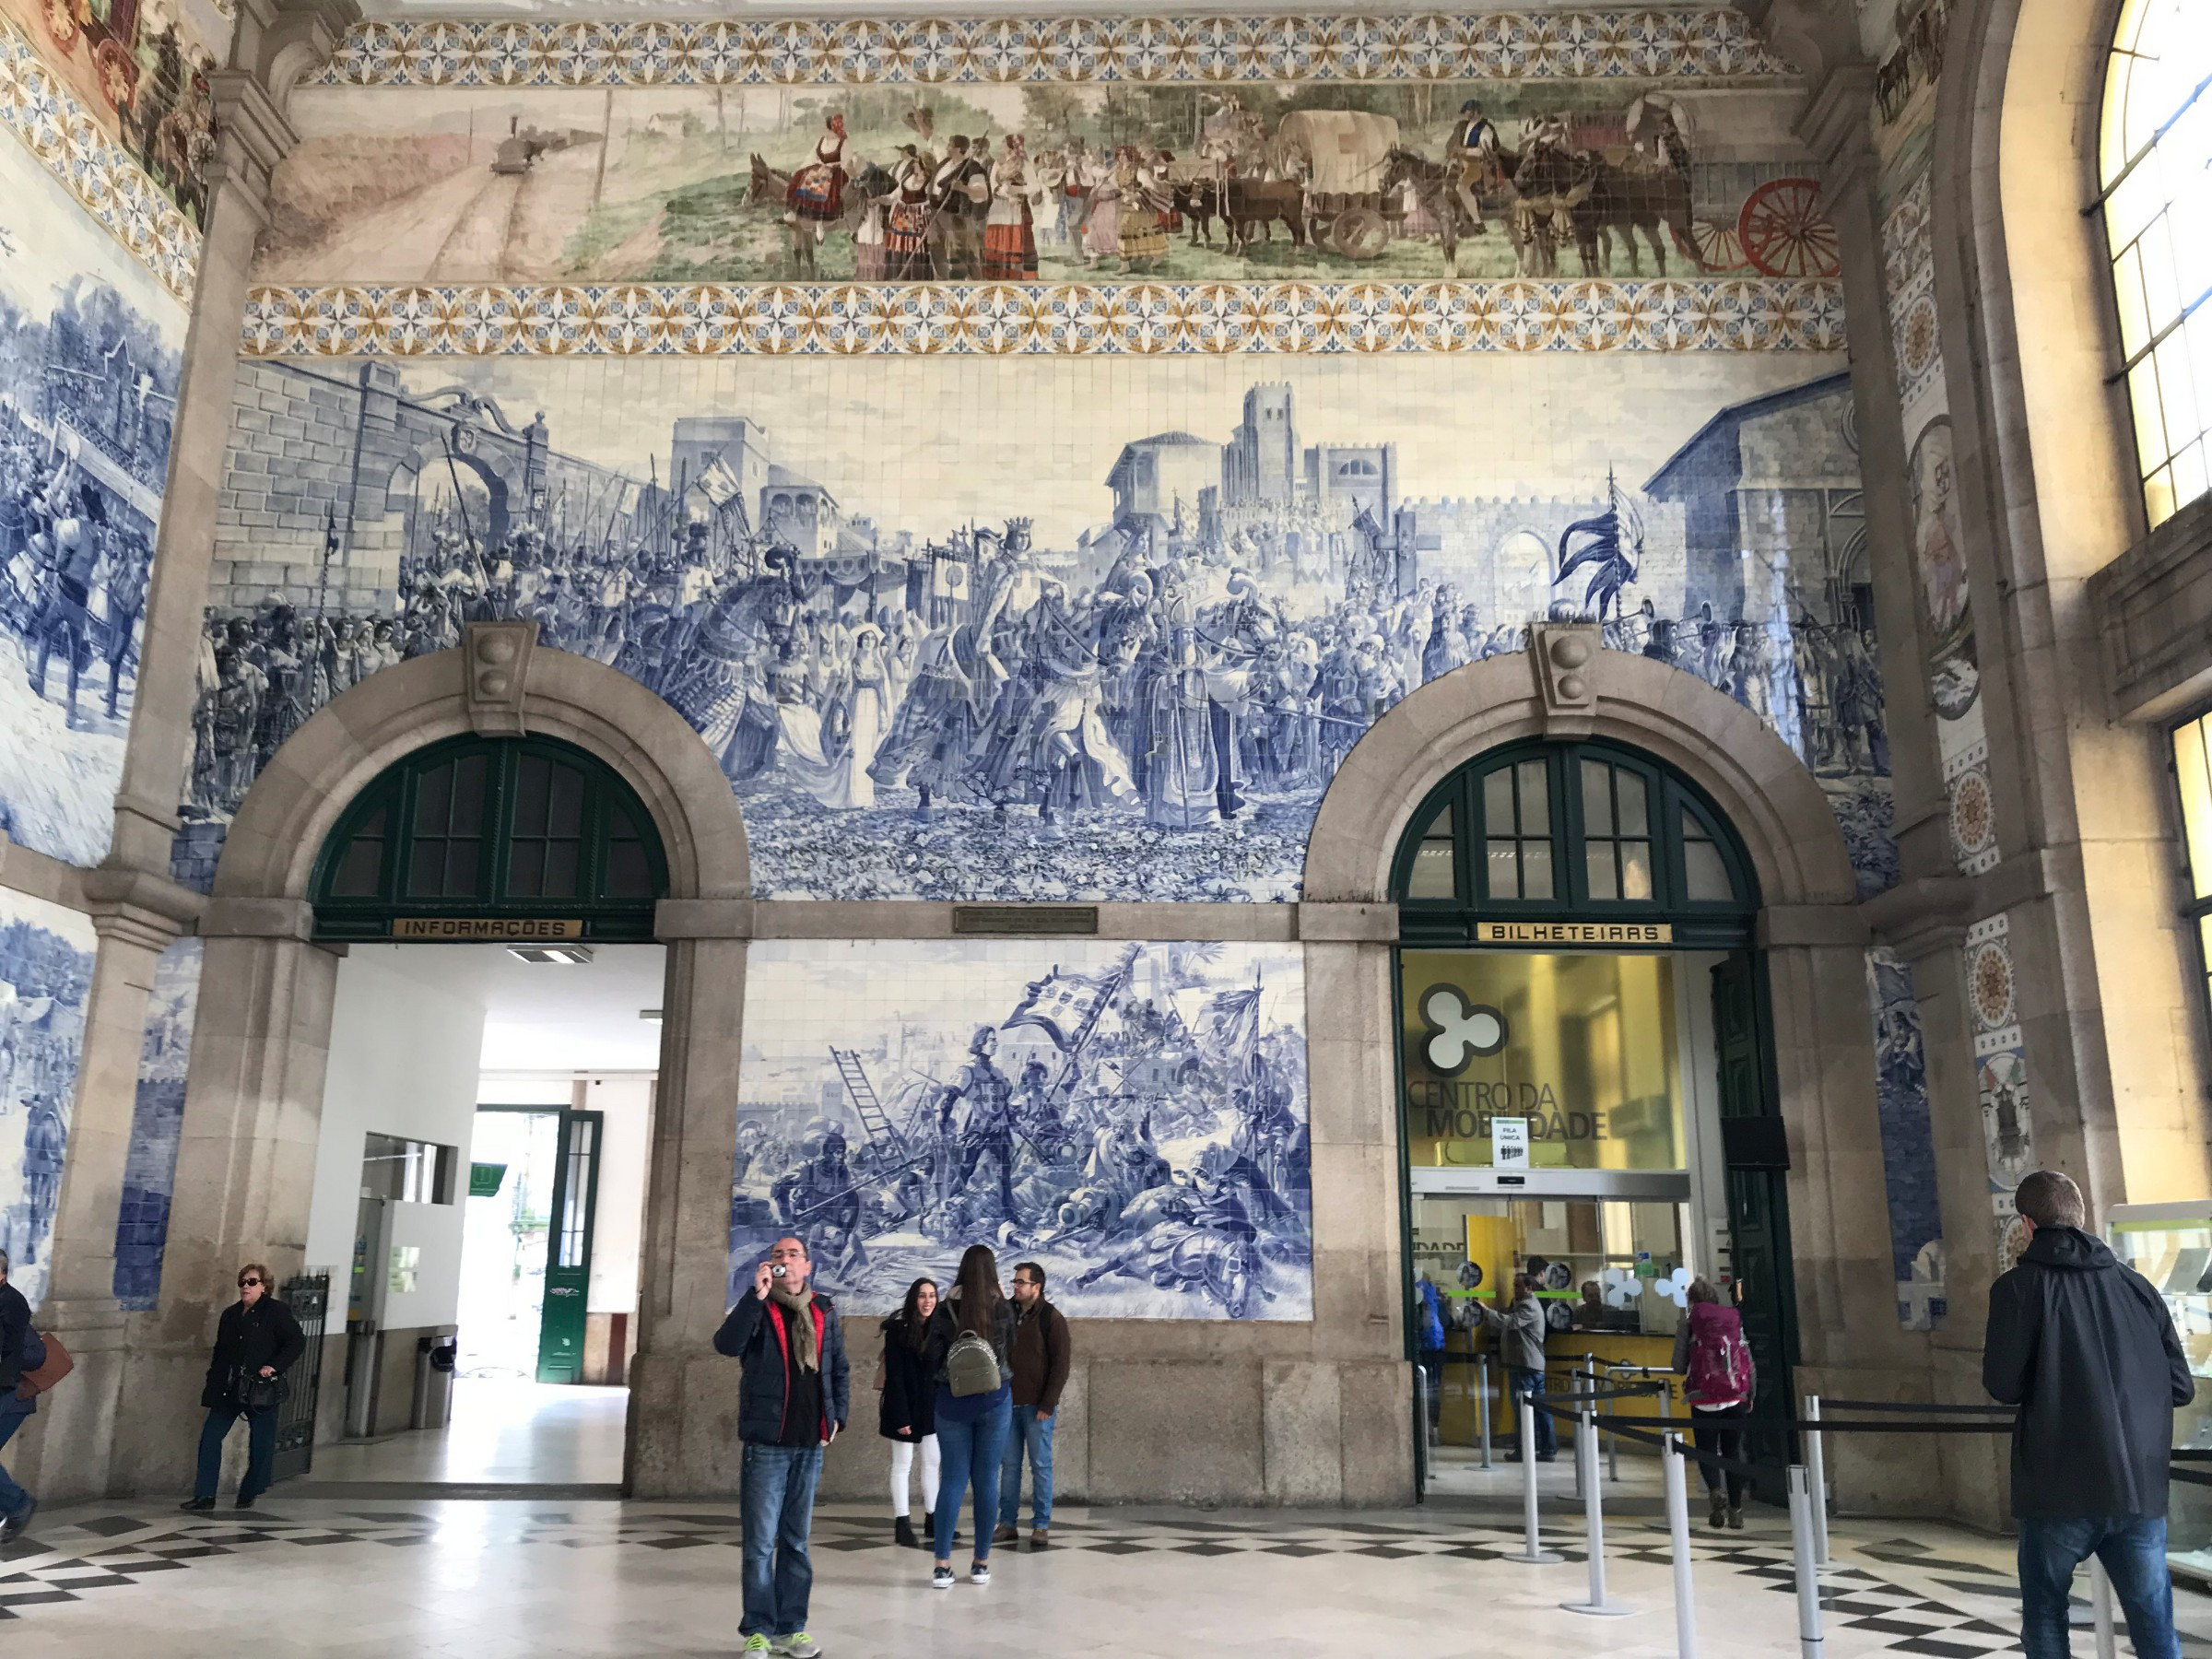 Porto train station - 22,000 tiles | Photo